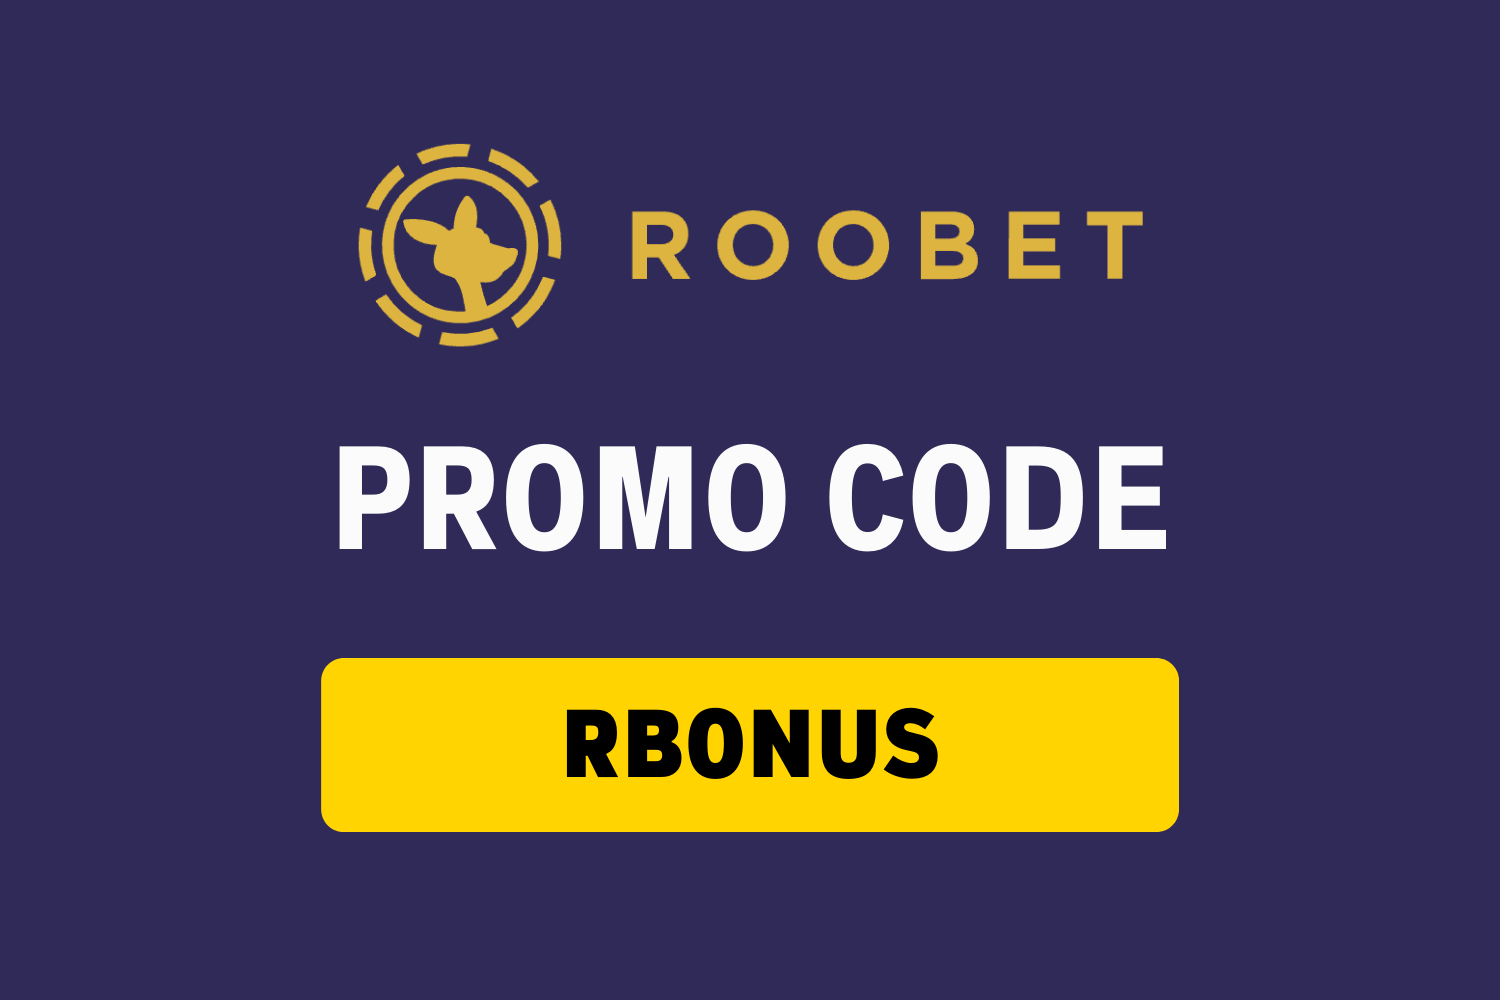 roobet promo code free money reddit